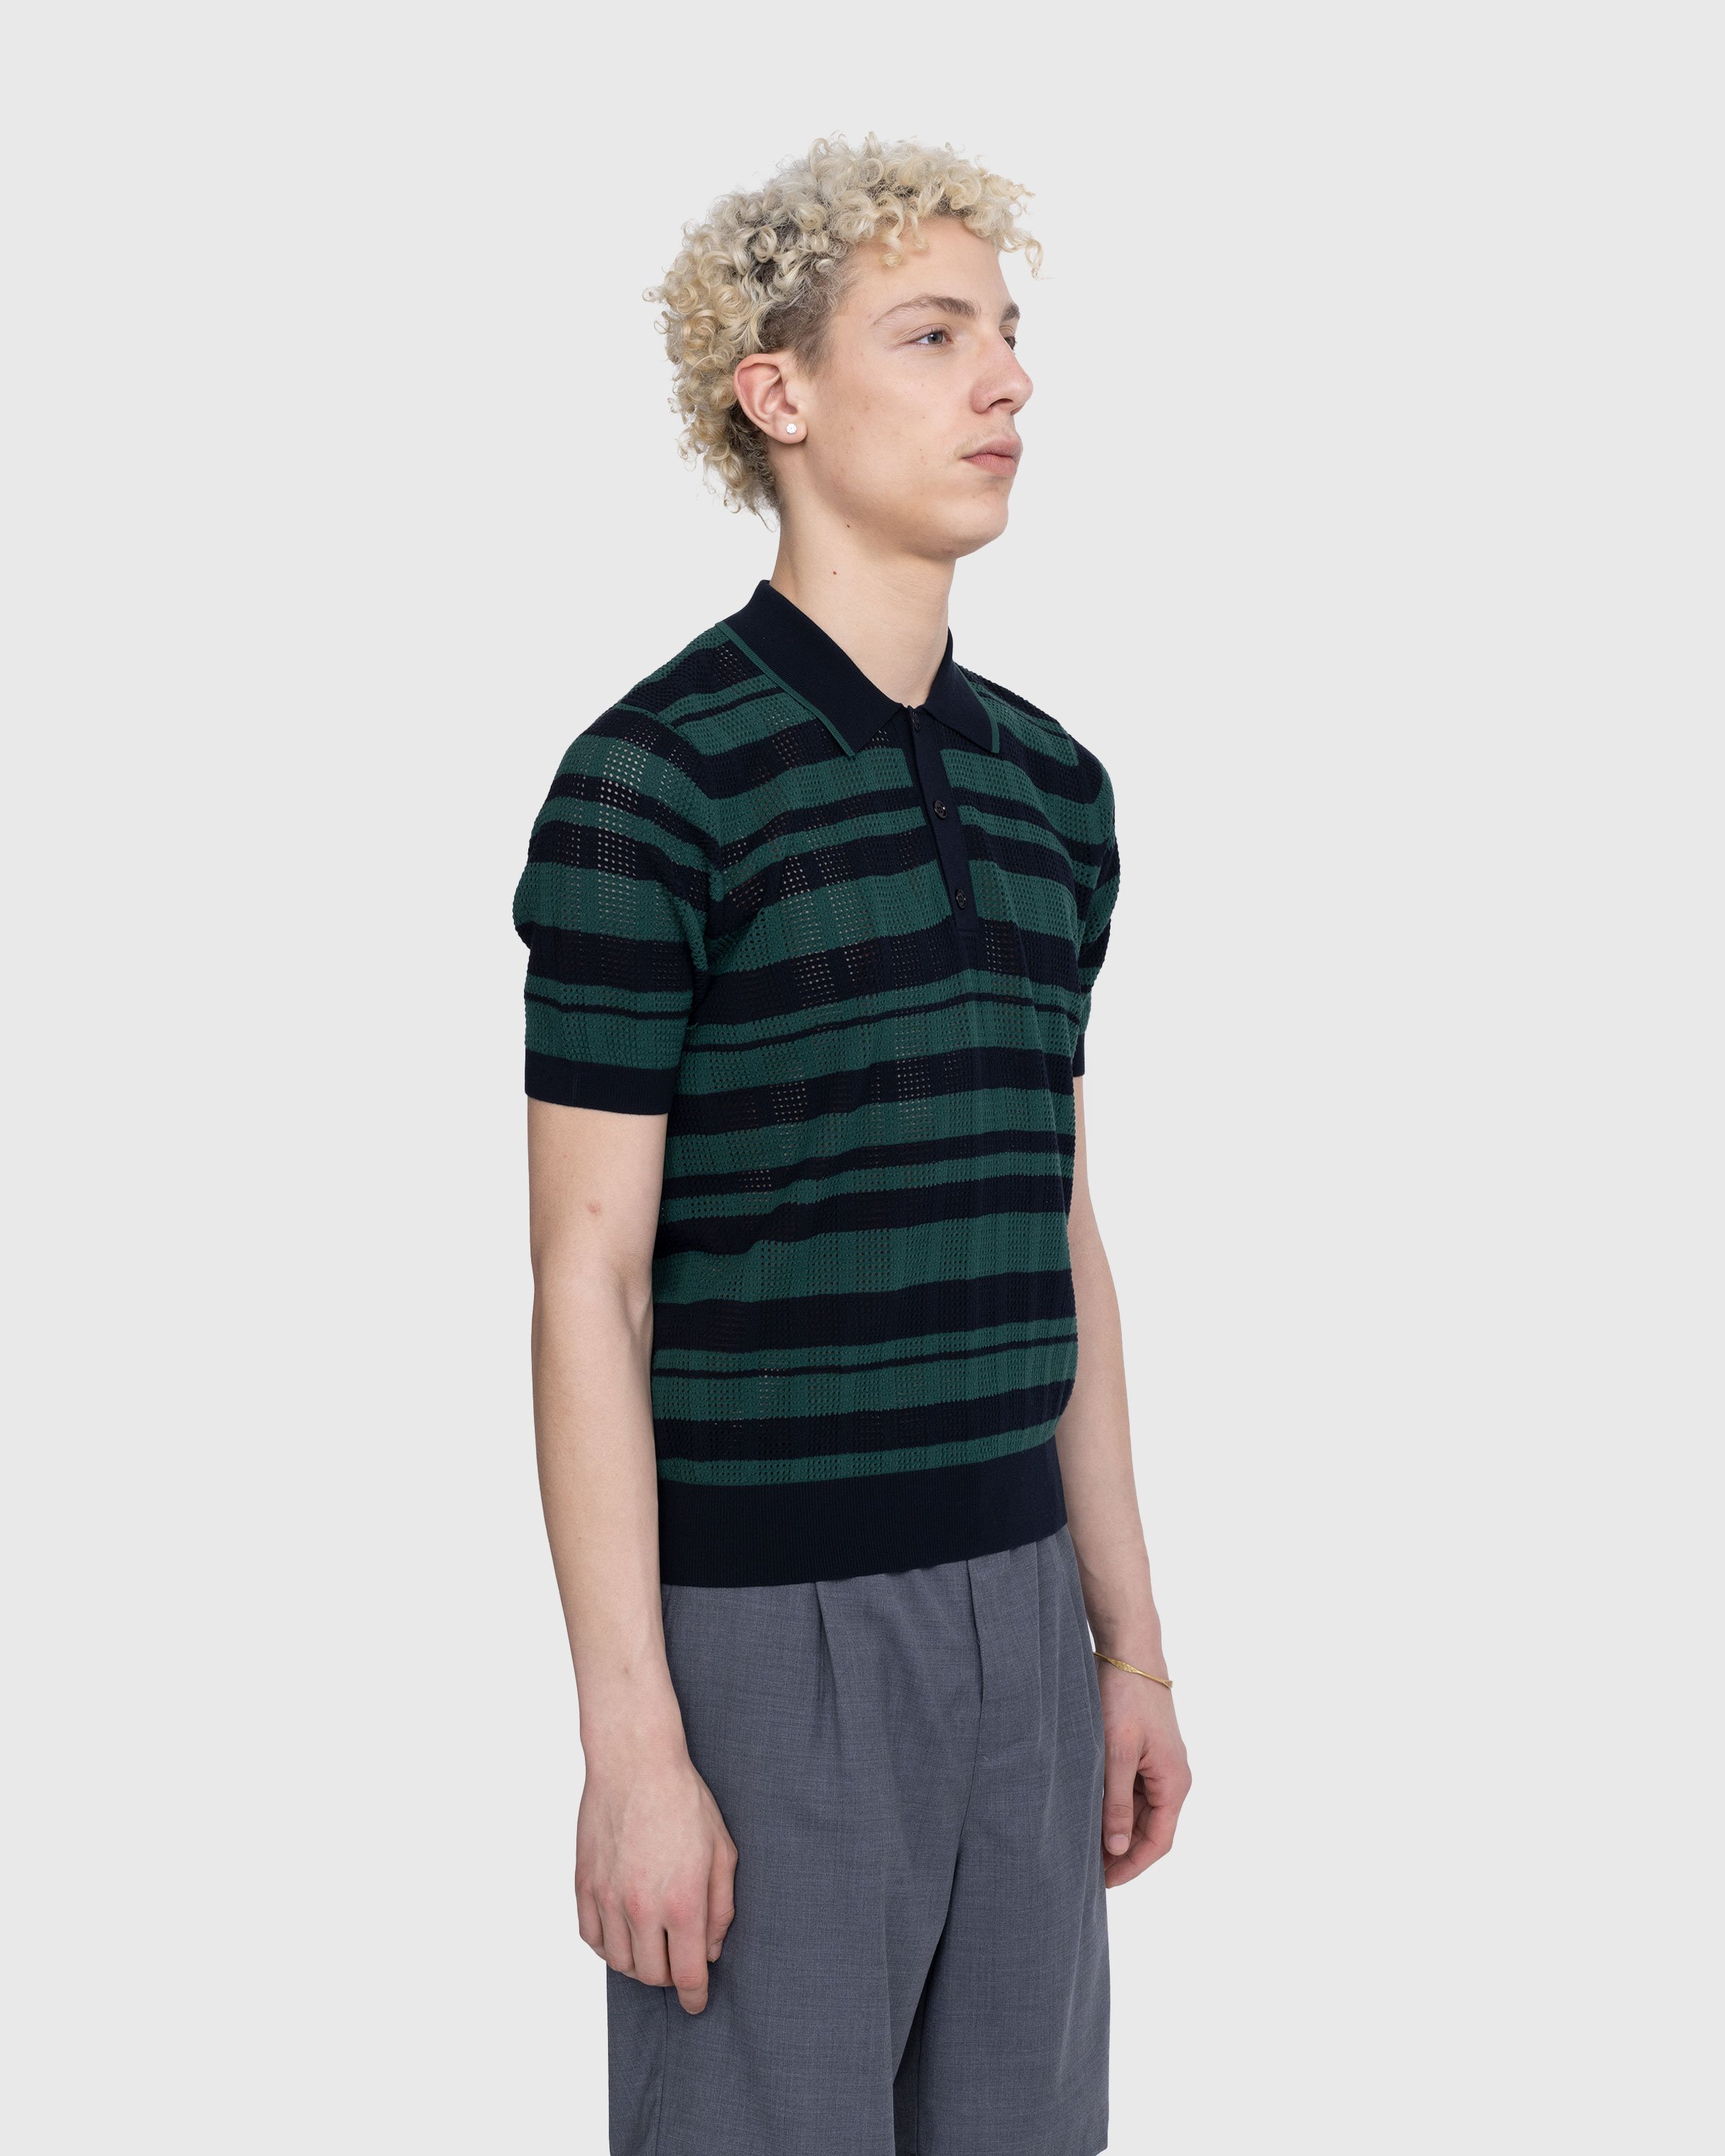 Dries van Noten - Mirko Striped Polo Shirt Black - Clothing - Black - Image 4